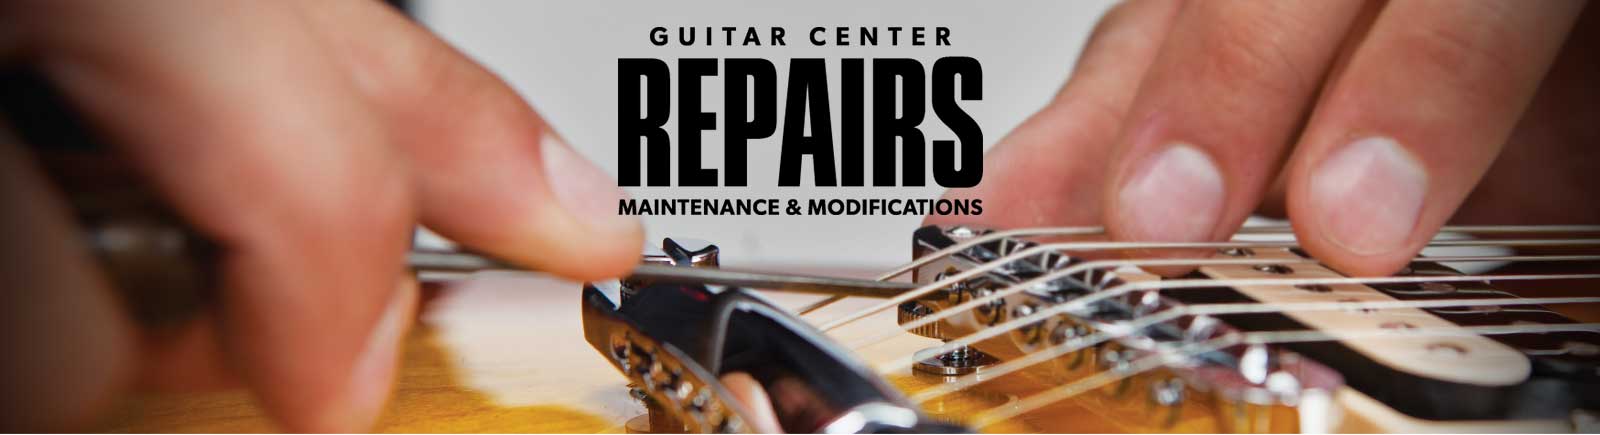 Guitar Center repairs maintenance and modification